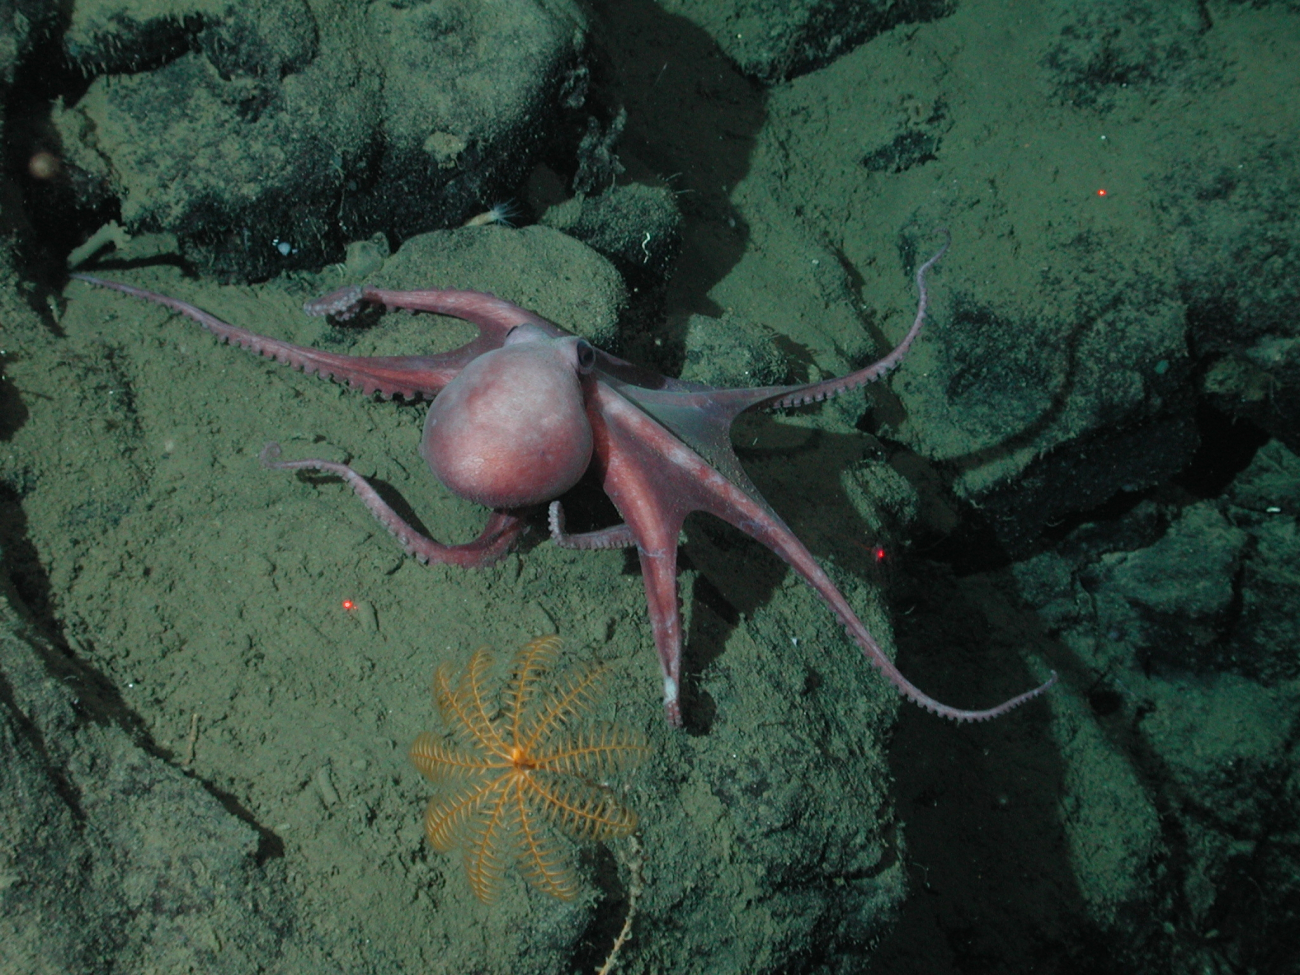 This curious octopus (Benthoctopus sp